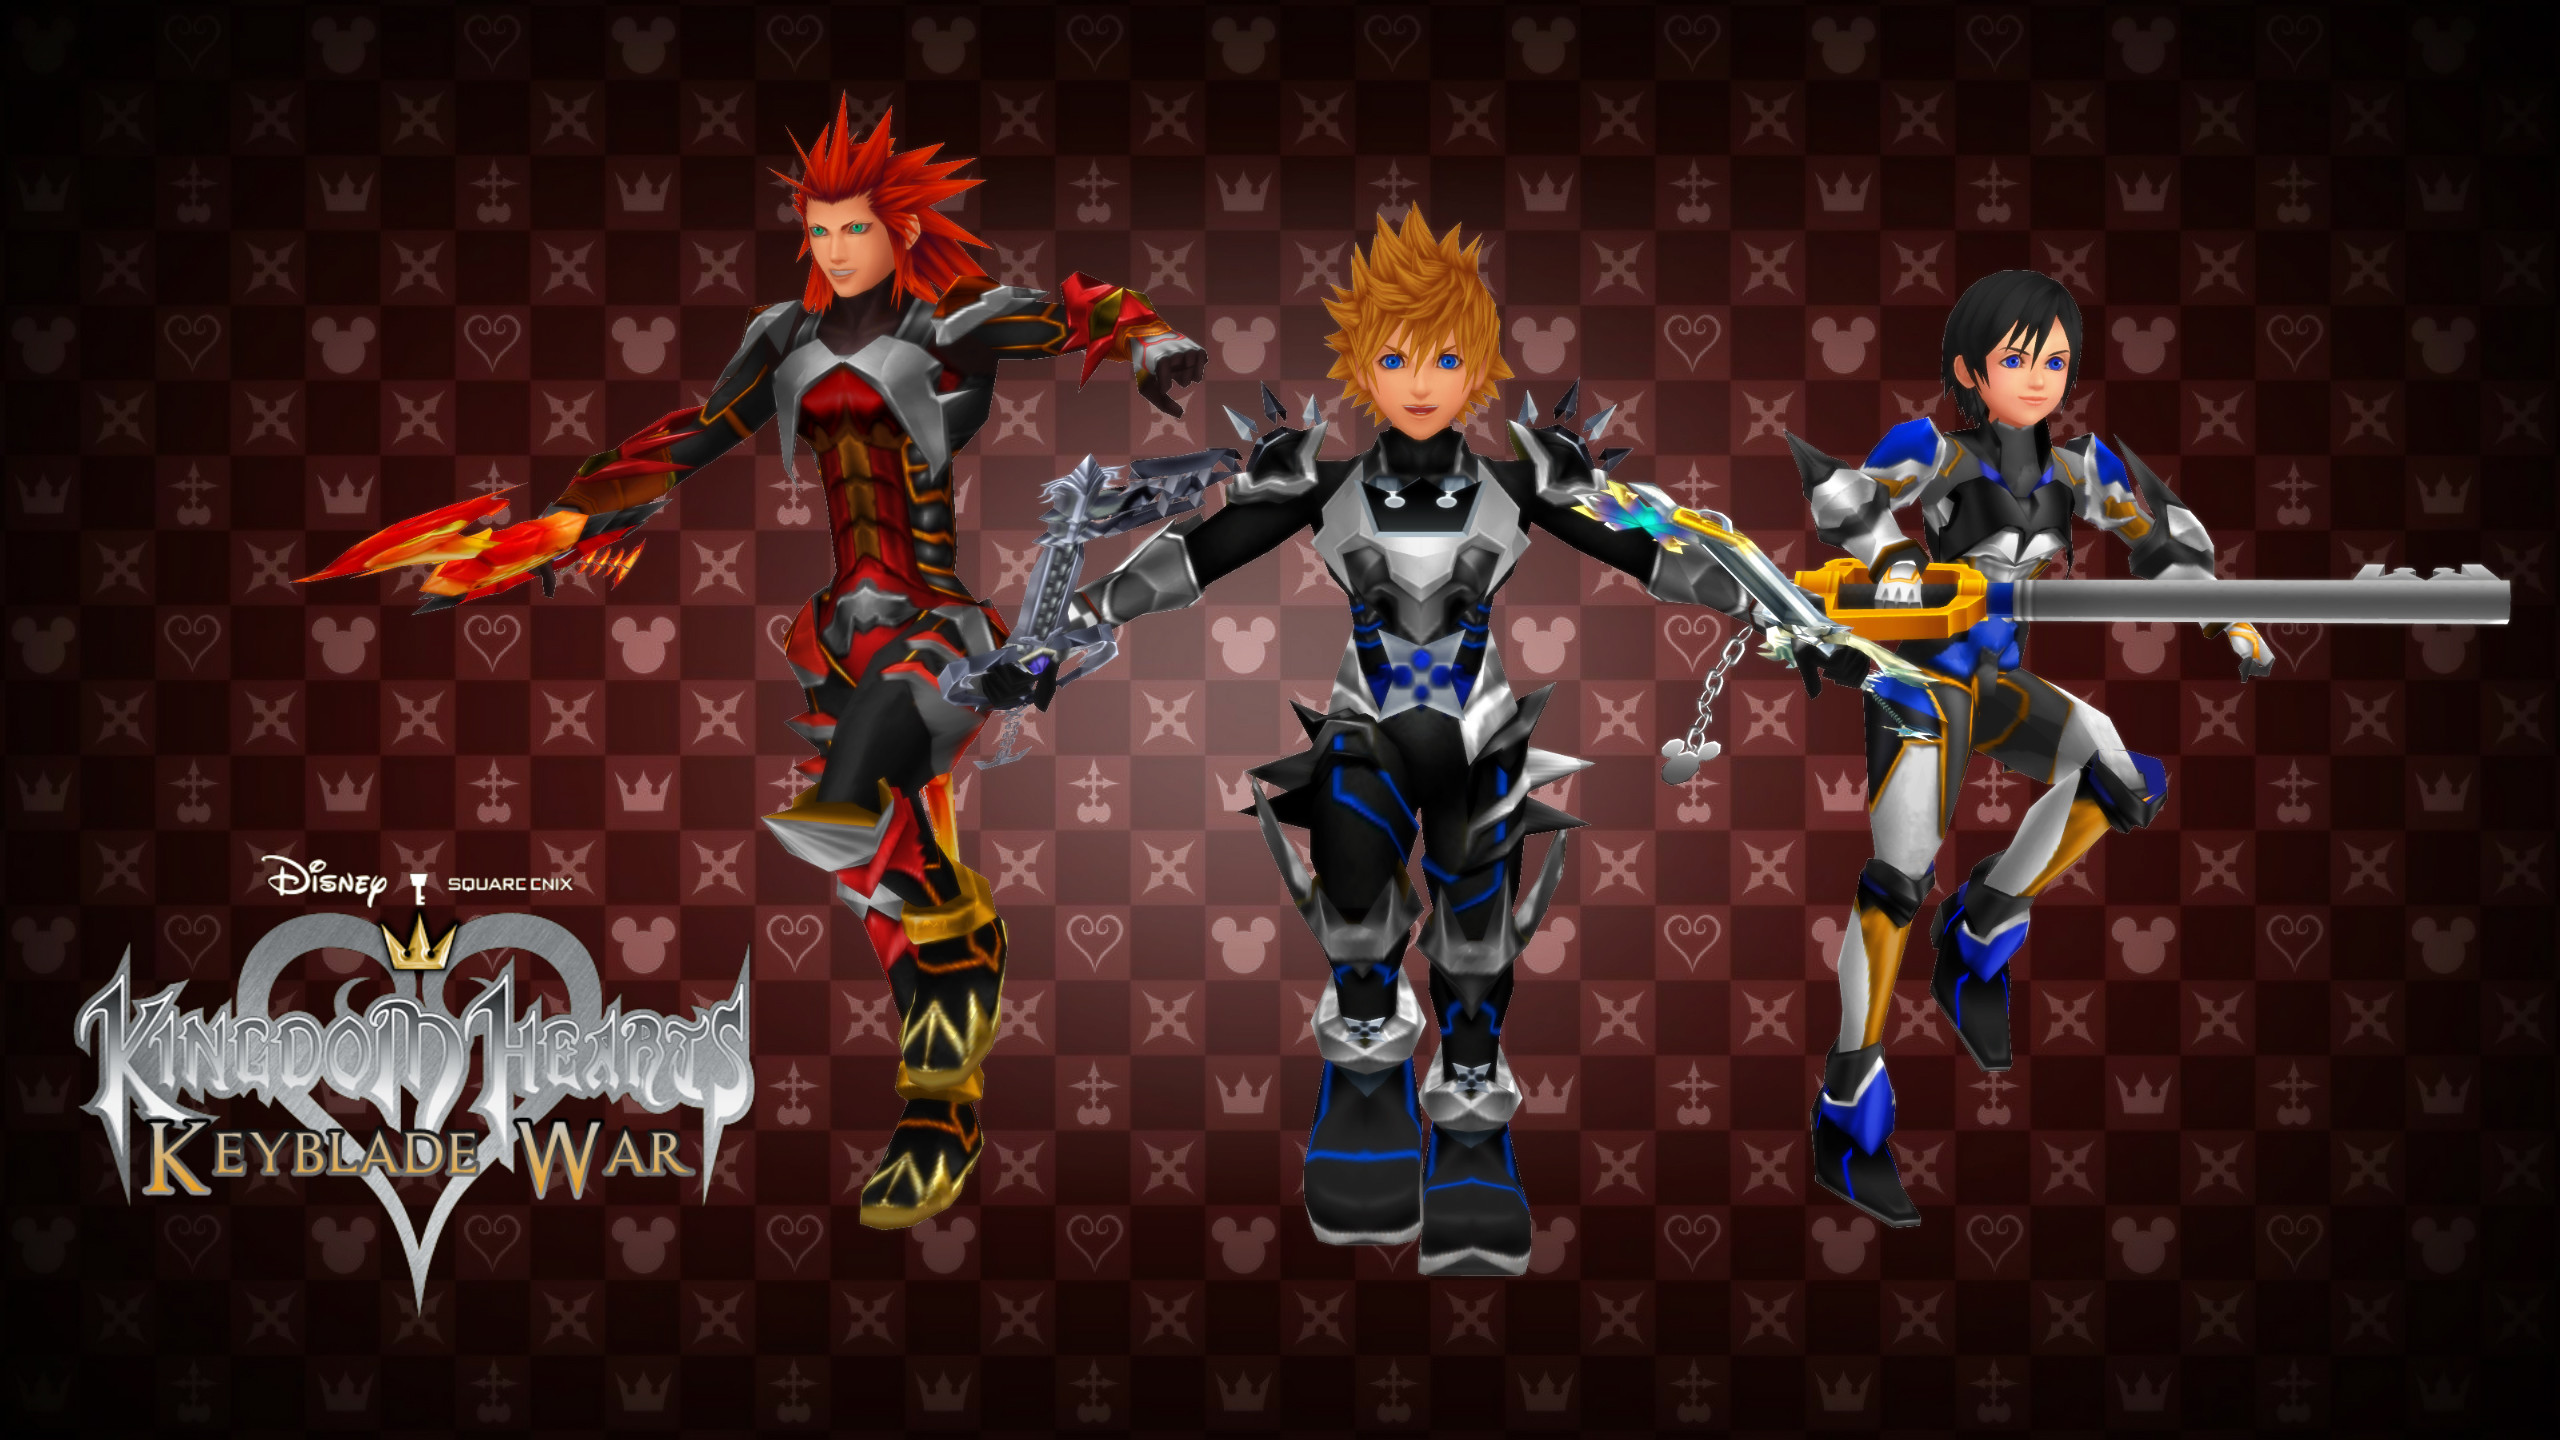 2560x1440 ... Kingdom Hearts Keyblade War Custom Wallpaper 02 by todsen19